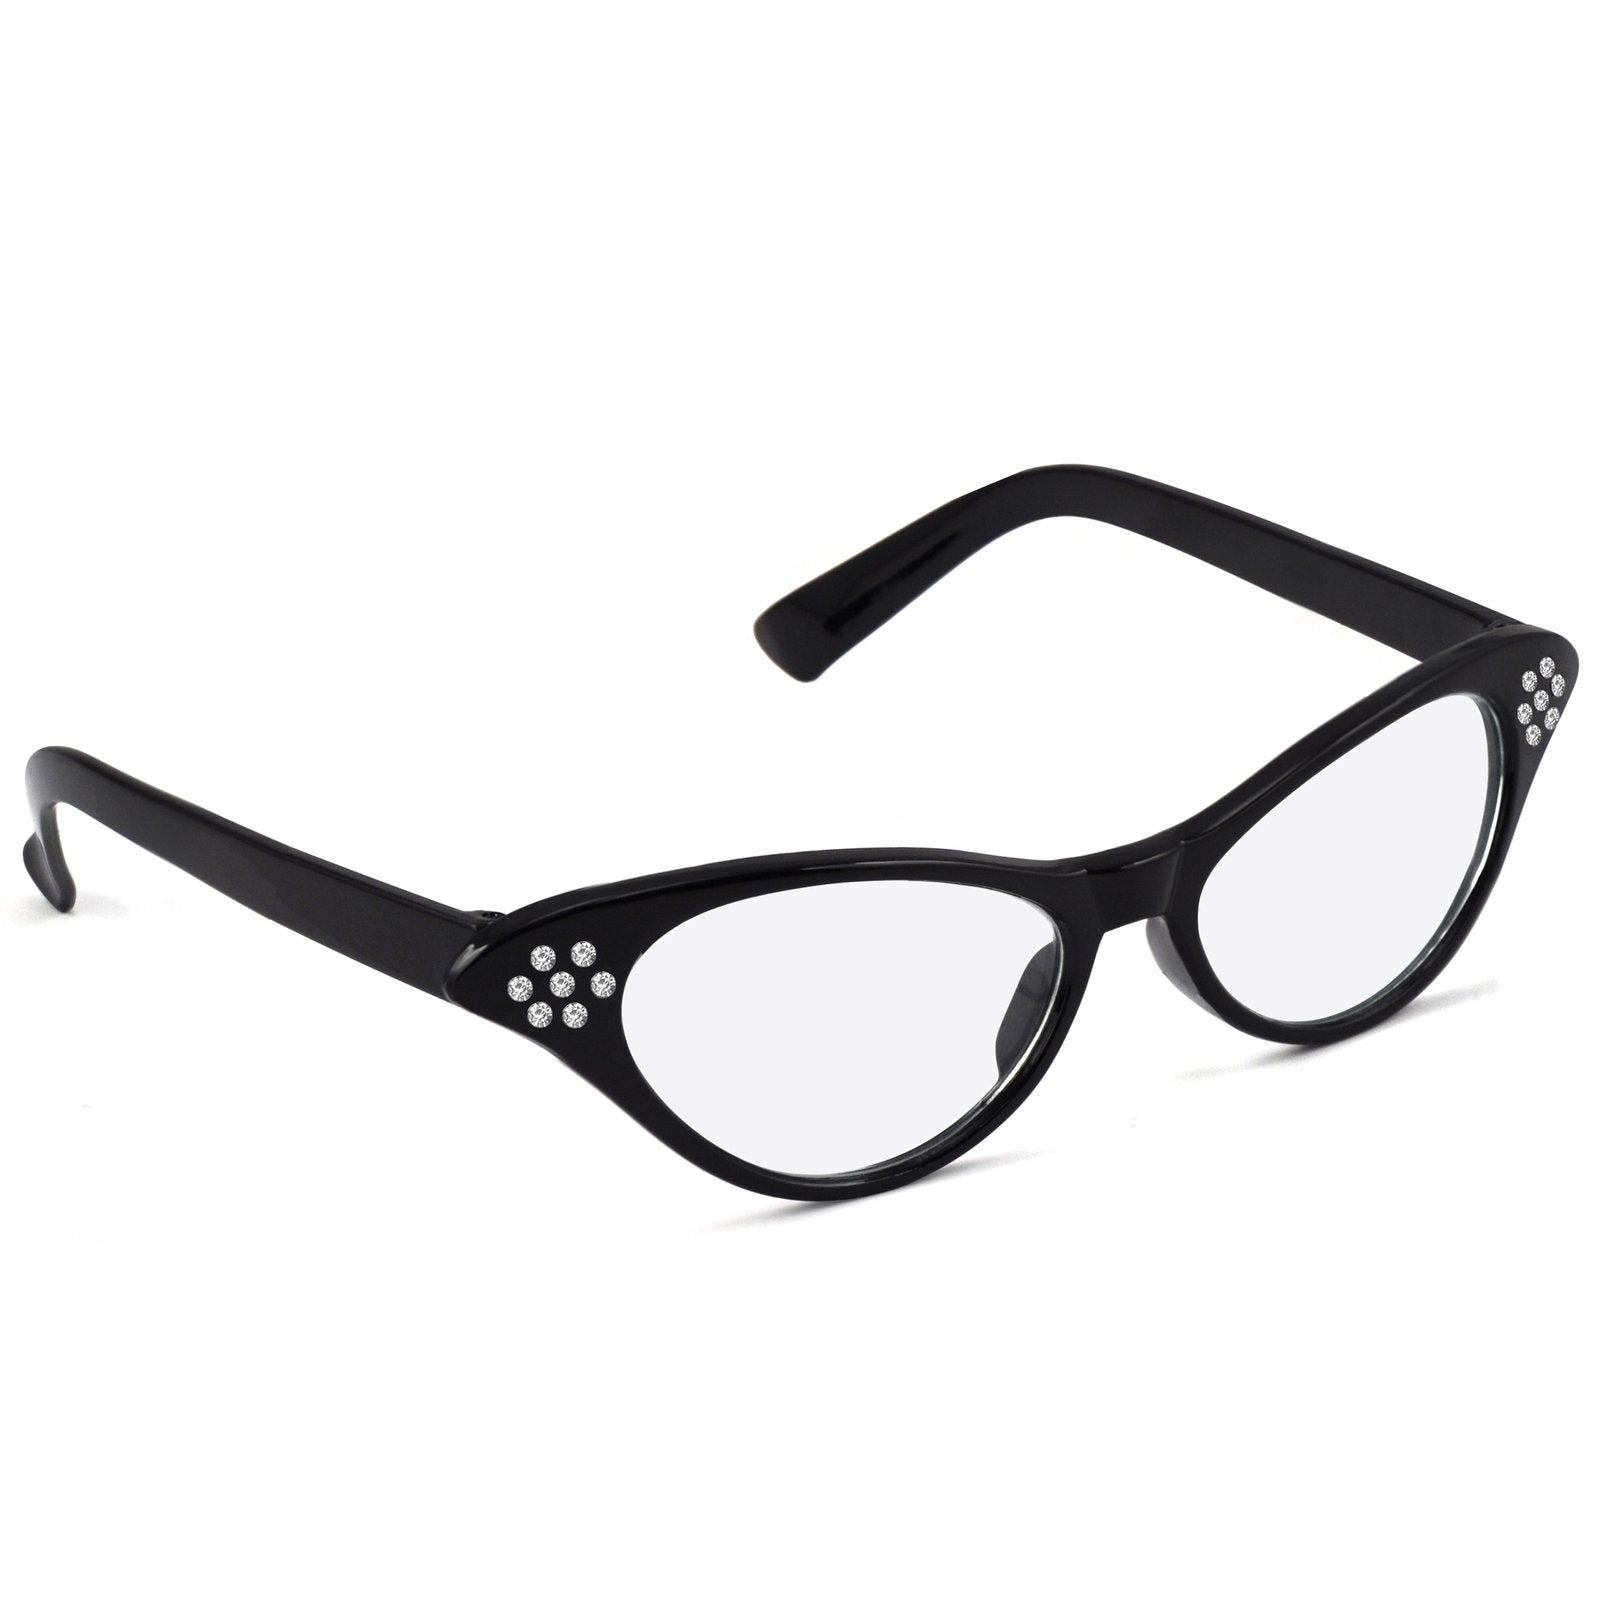 Glasses 1950s Rhinestone Black